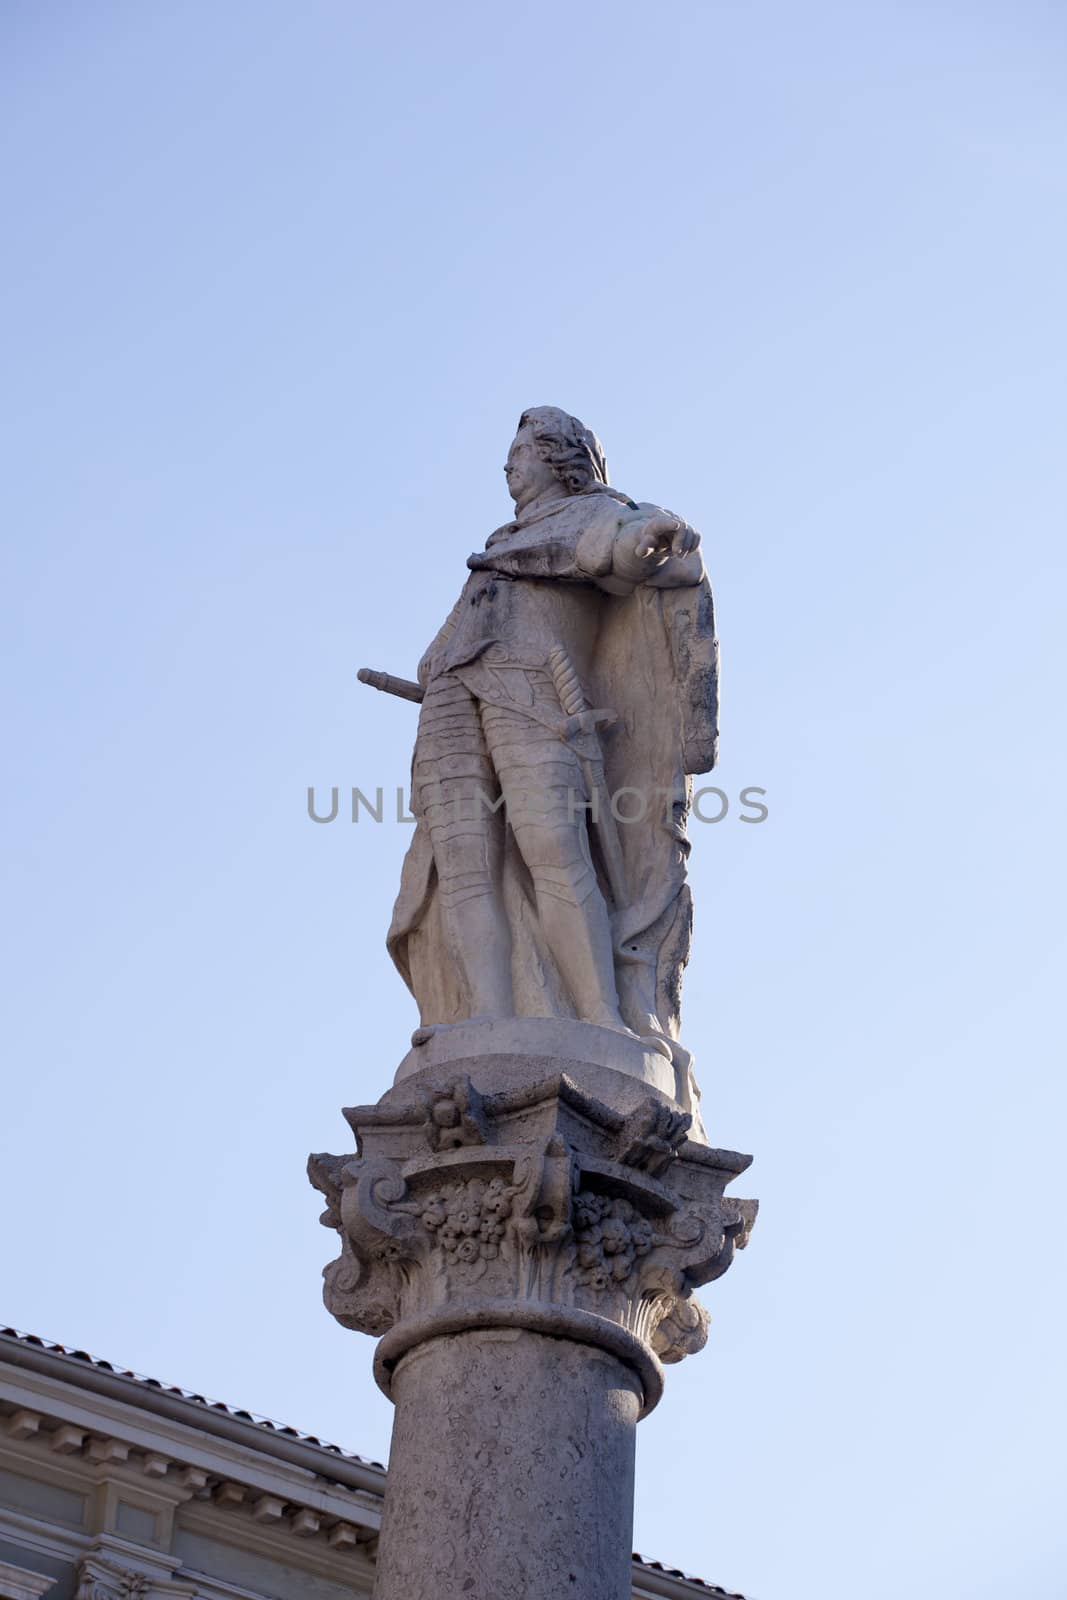 Carlo VI monument, Trieste - Italy